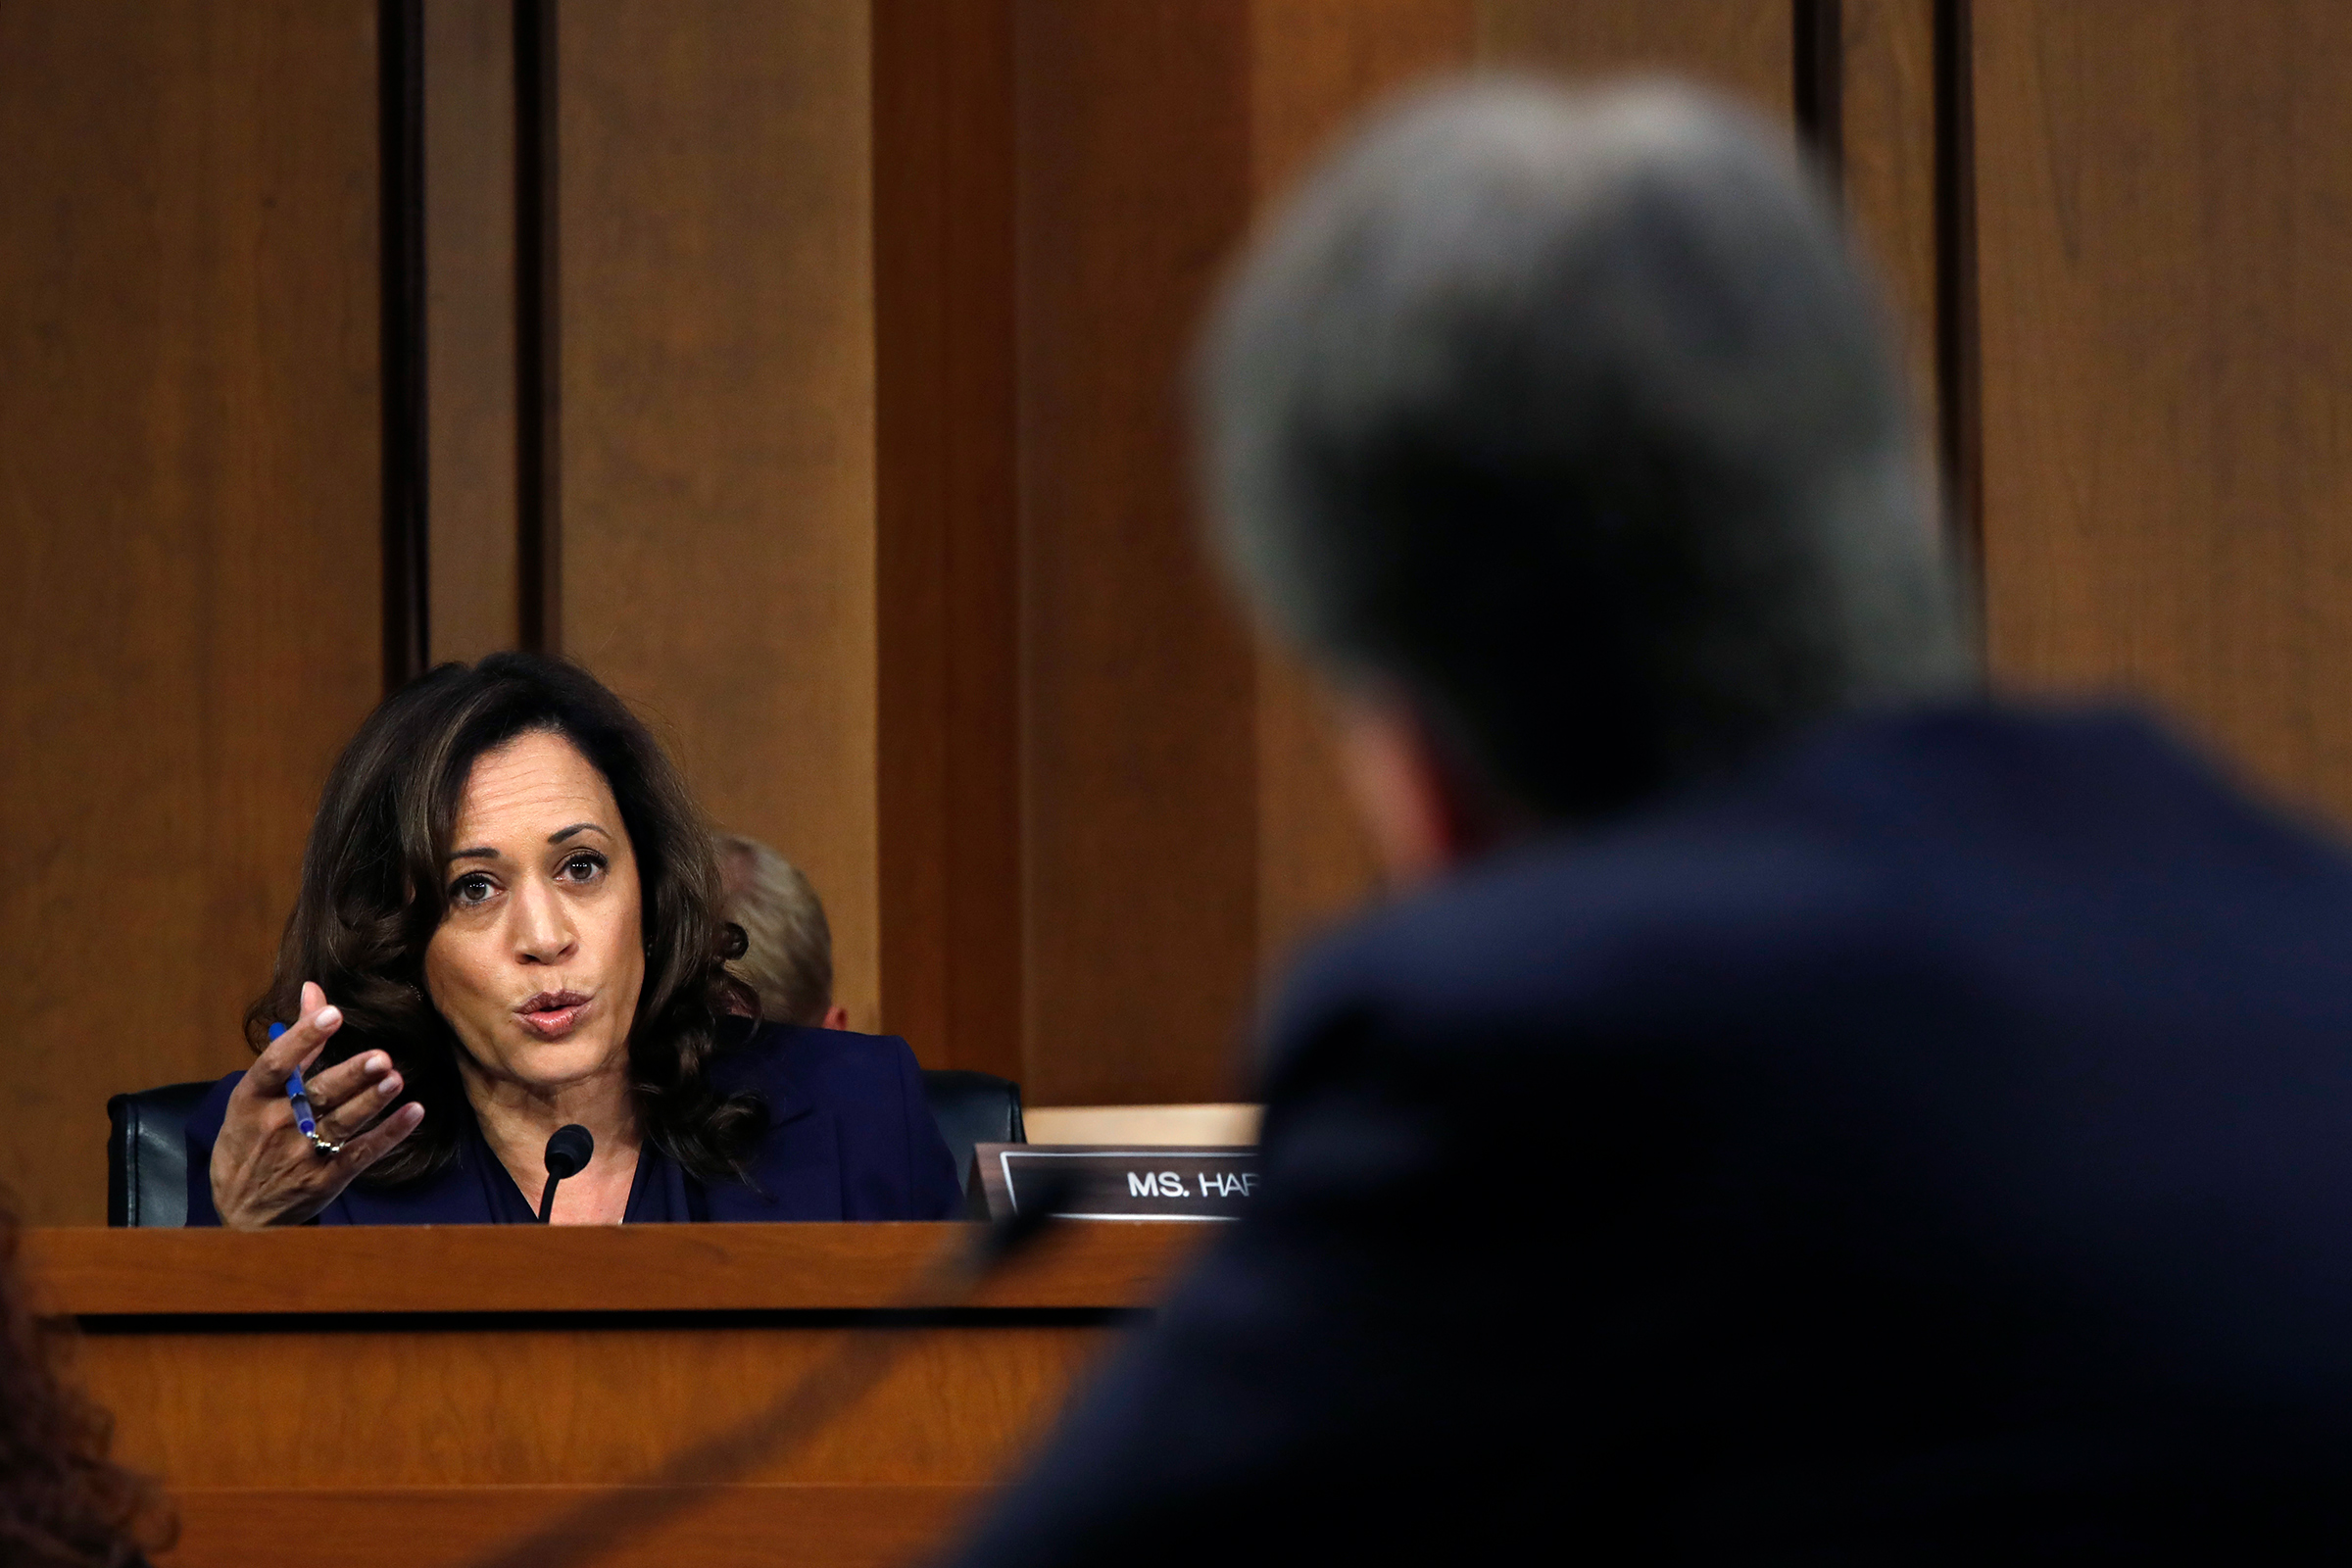 Harris rose in Senate hearings, grilling Supreme Court nominee Brett Kavanaugh in September 2018 (Jacquelyn Martin—AP)